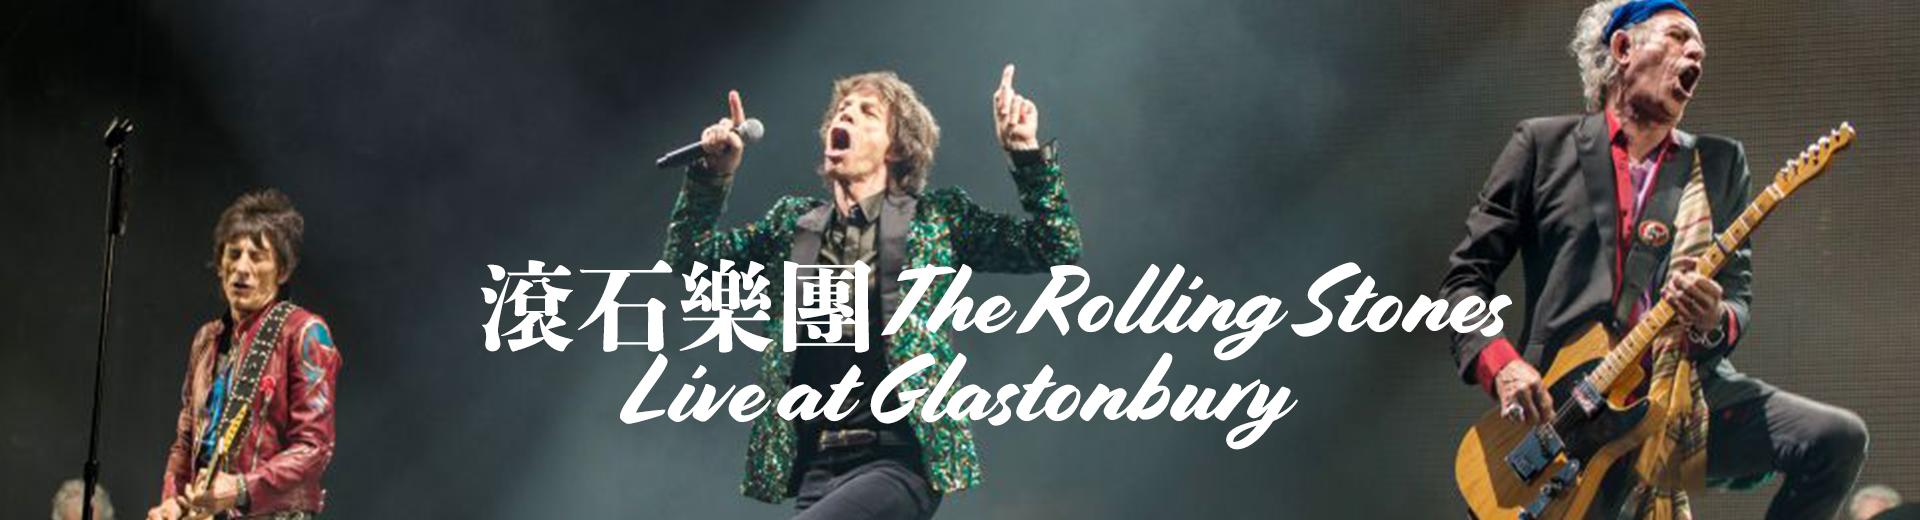 滾石樂團—英國格拉斯頓伯里音樂節現場 The Rolling Stones - Live at Glastonbury